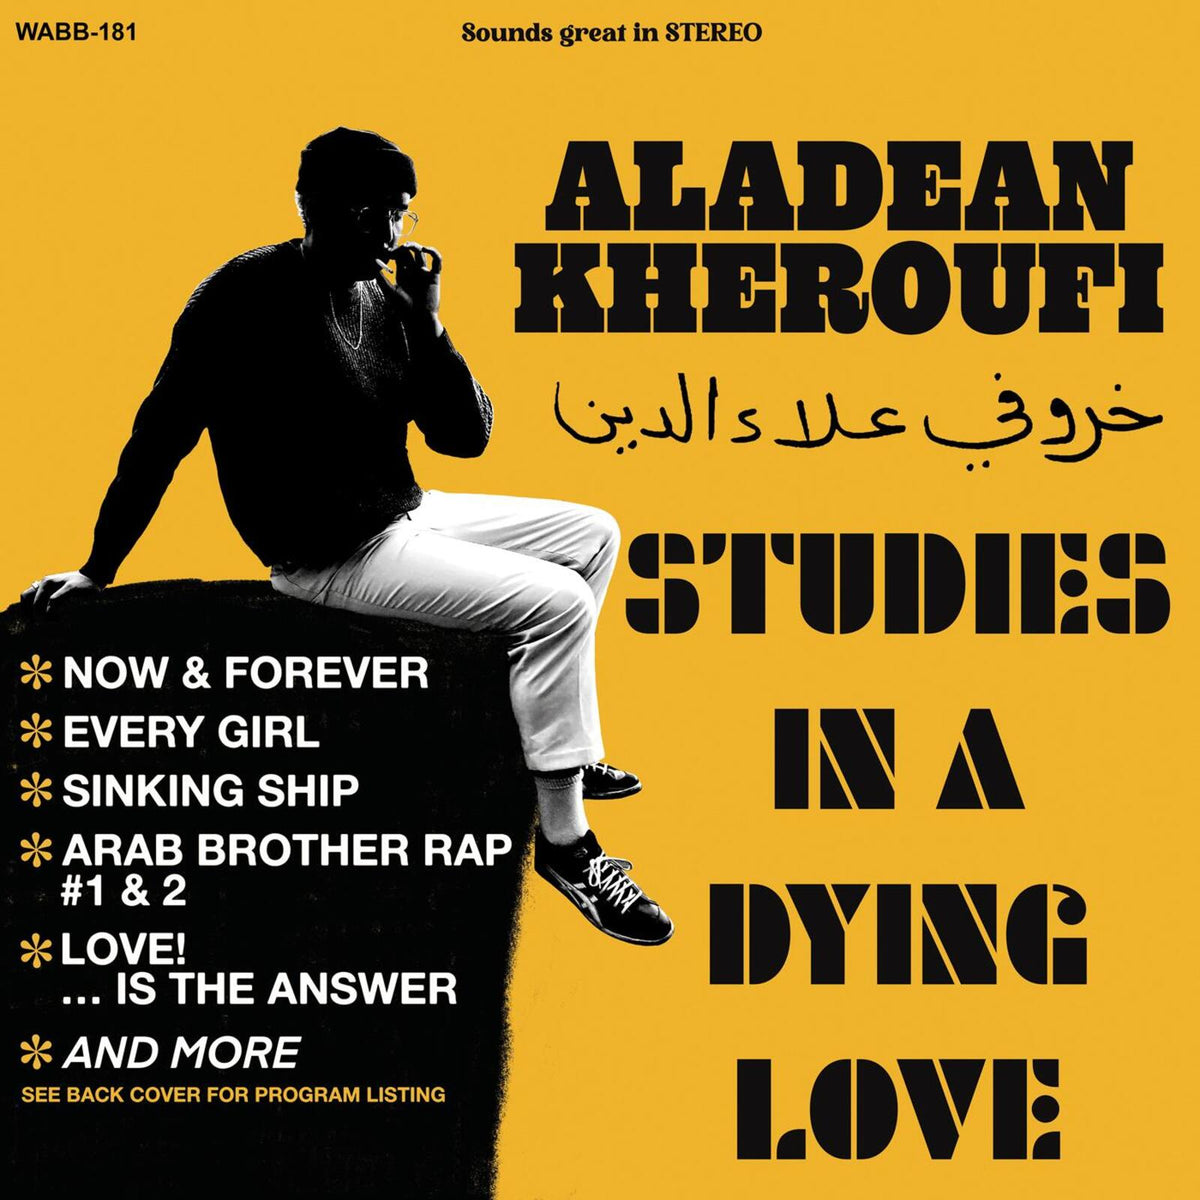 Aladean Kheroufi - Studies In A Dying Love - LPWABB181